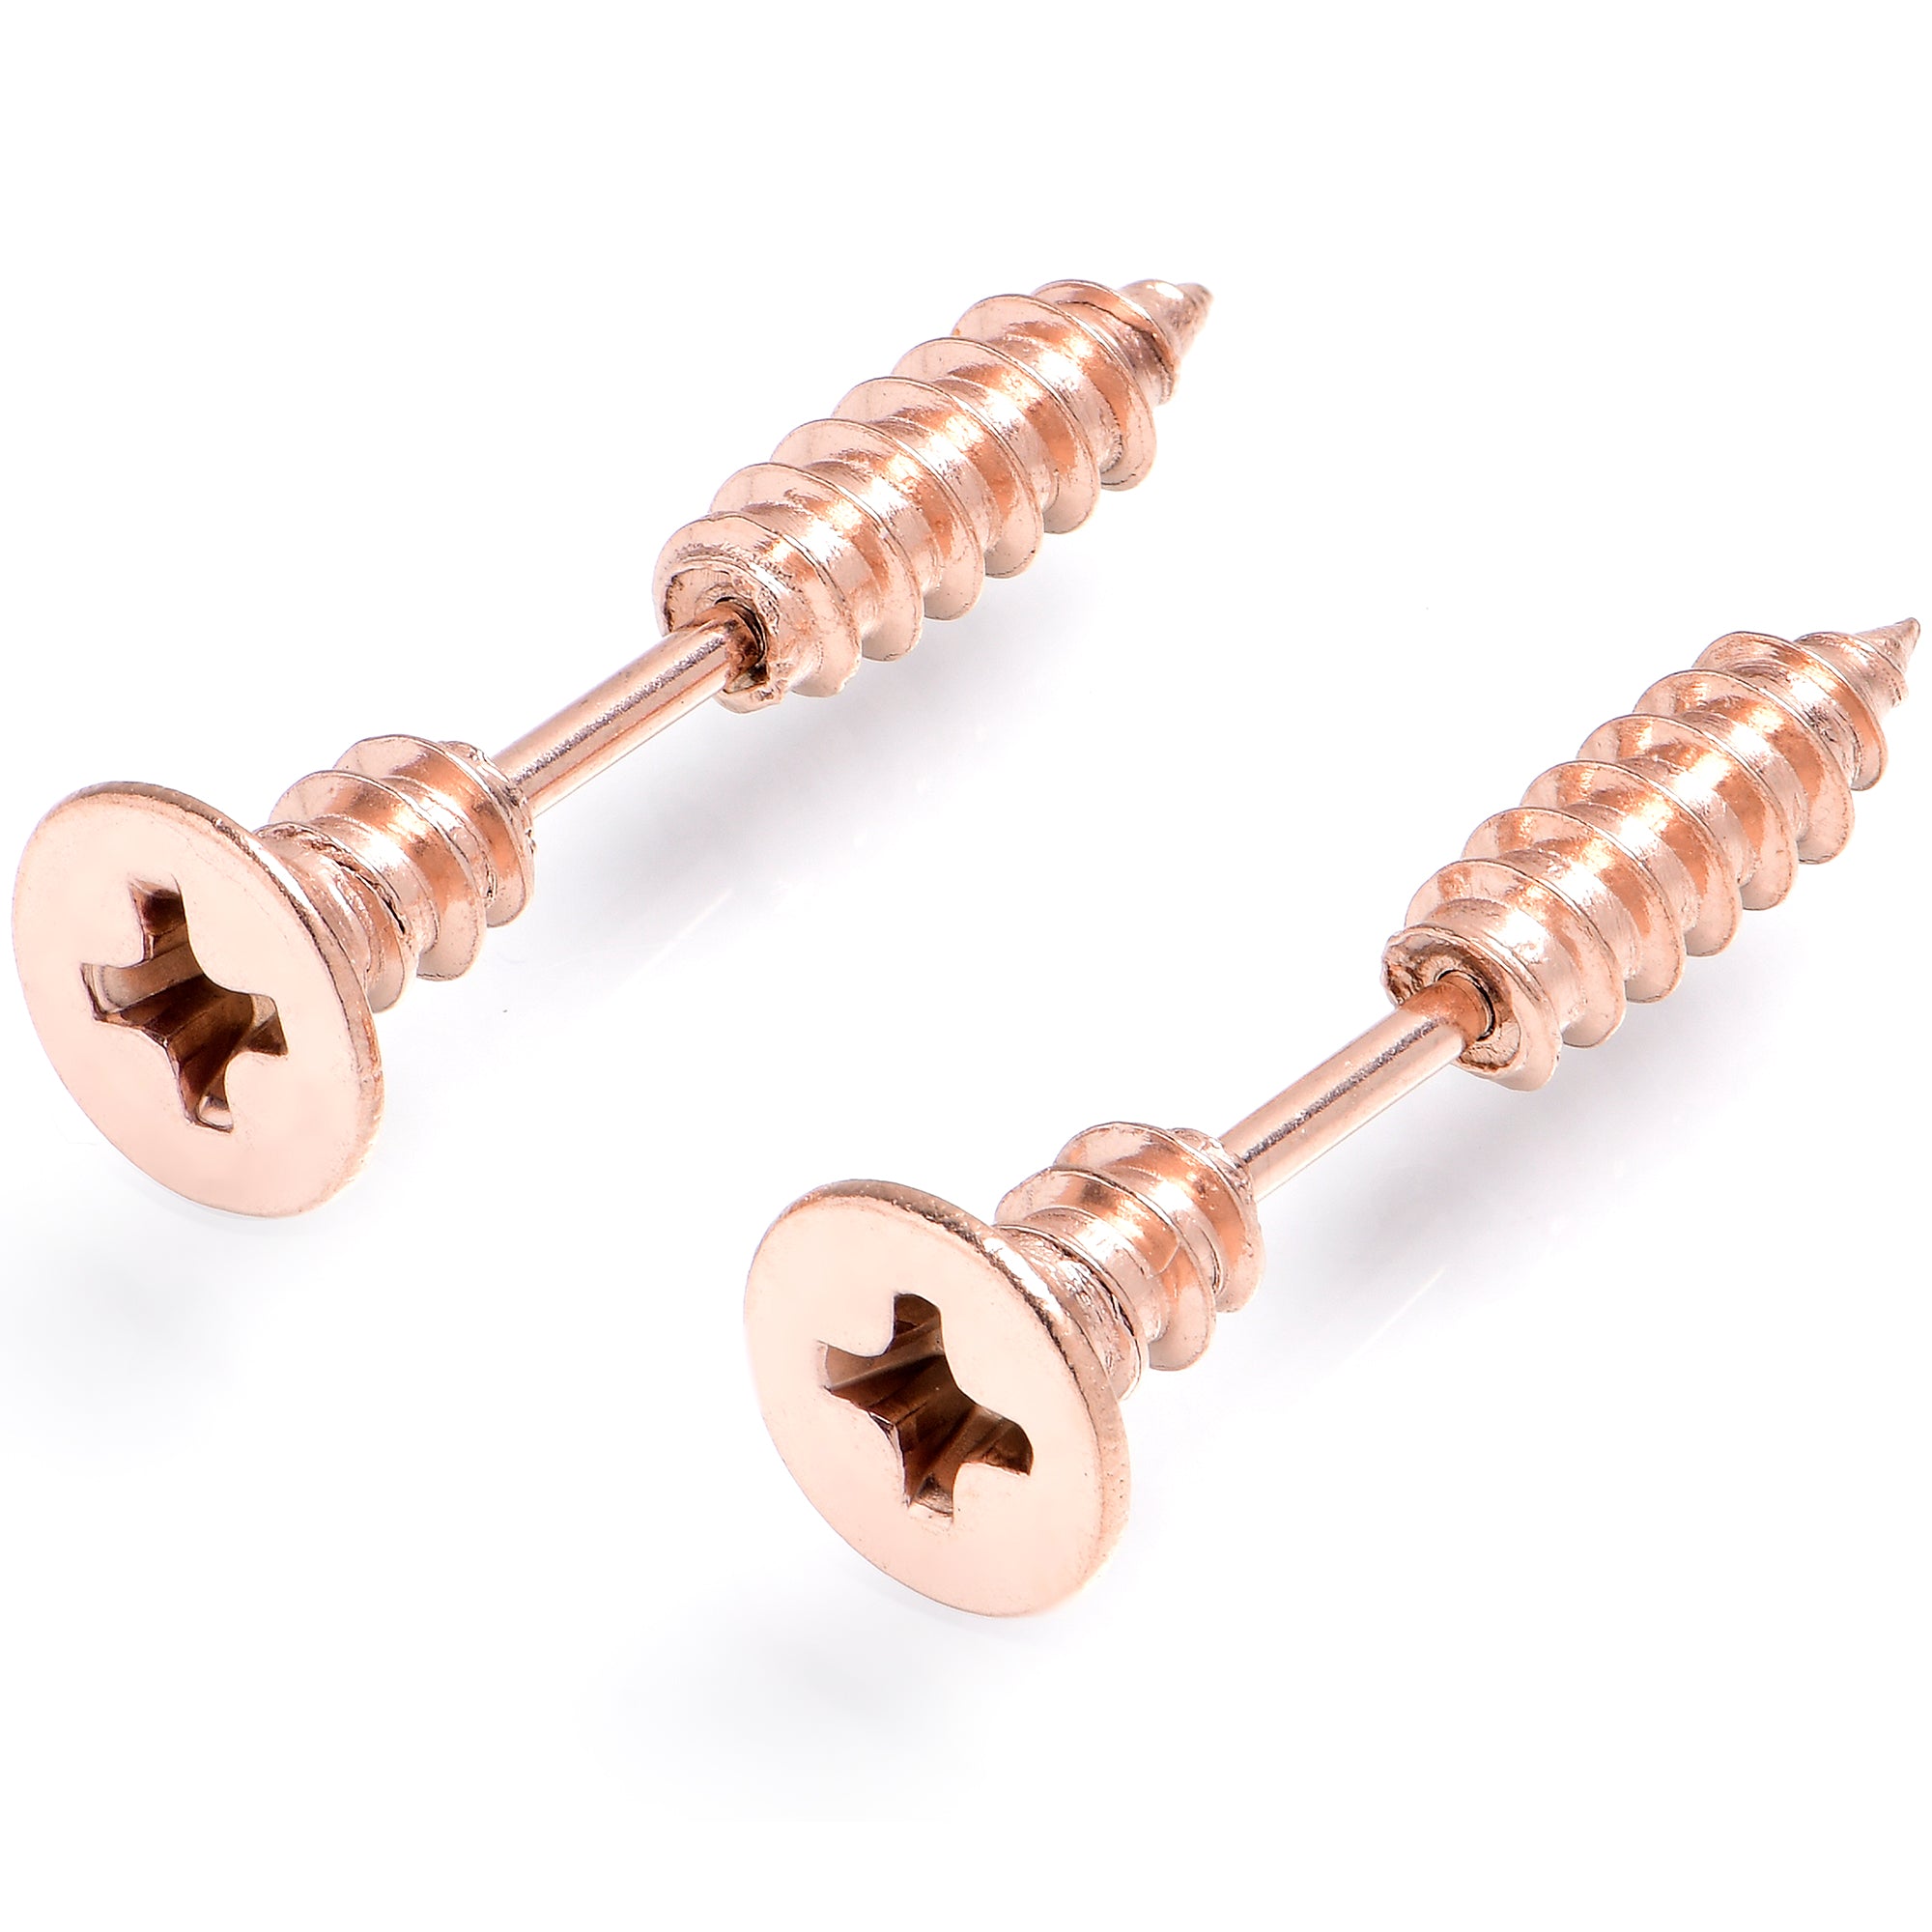 Rose Gold Stainless Steel Screw Stud Earrings Cheater Plug Set